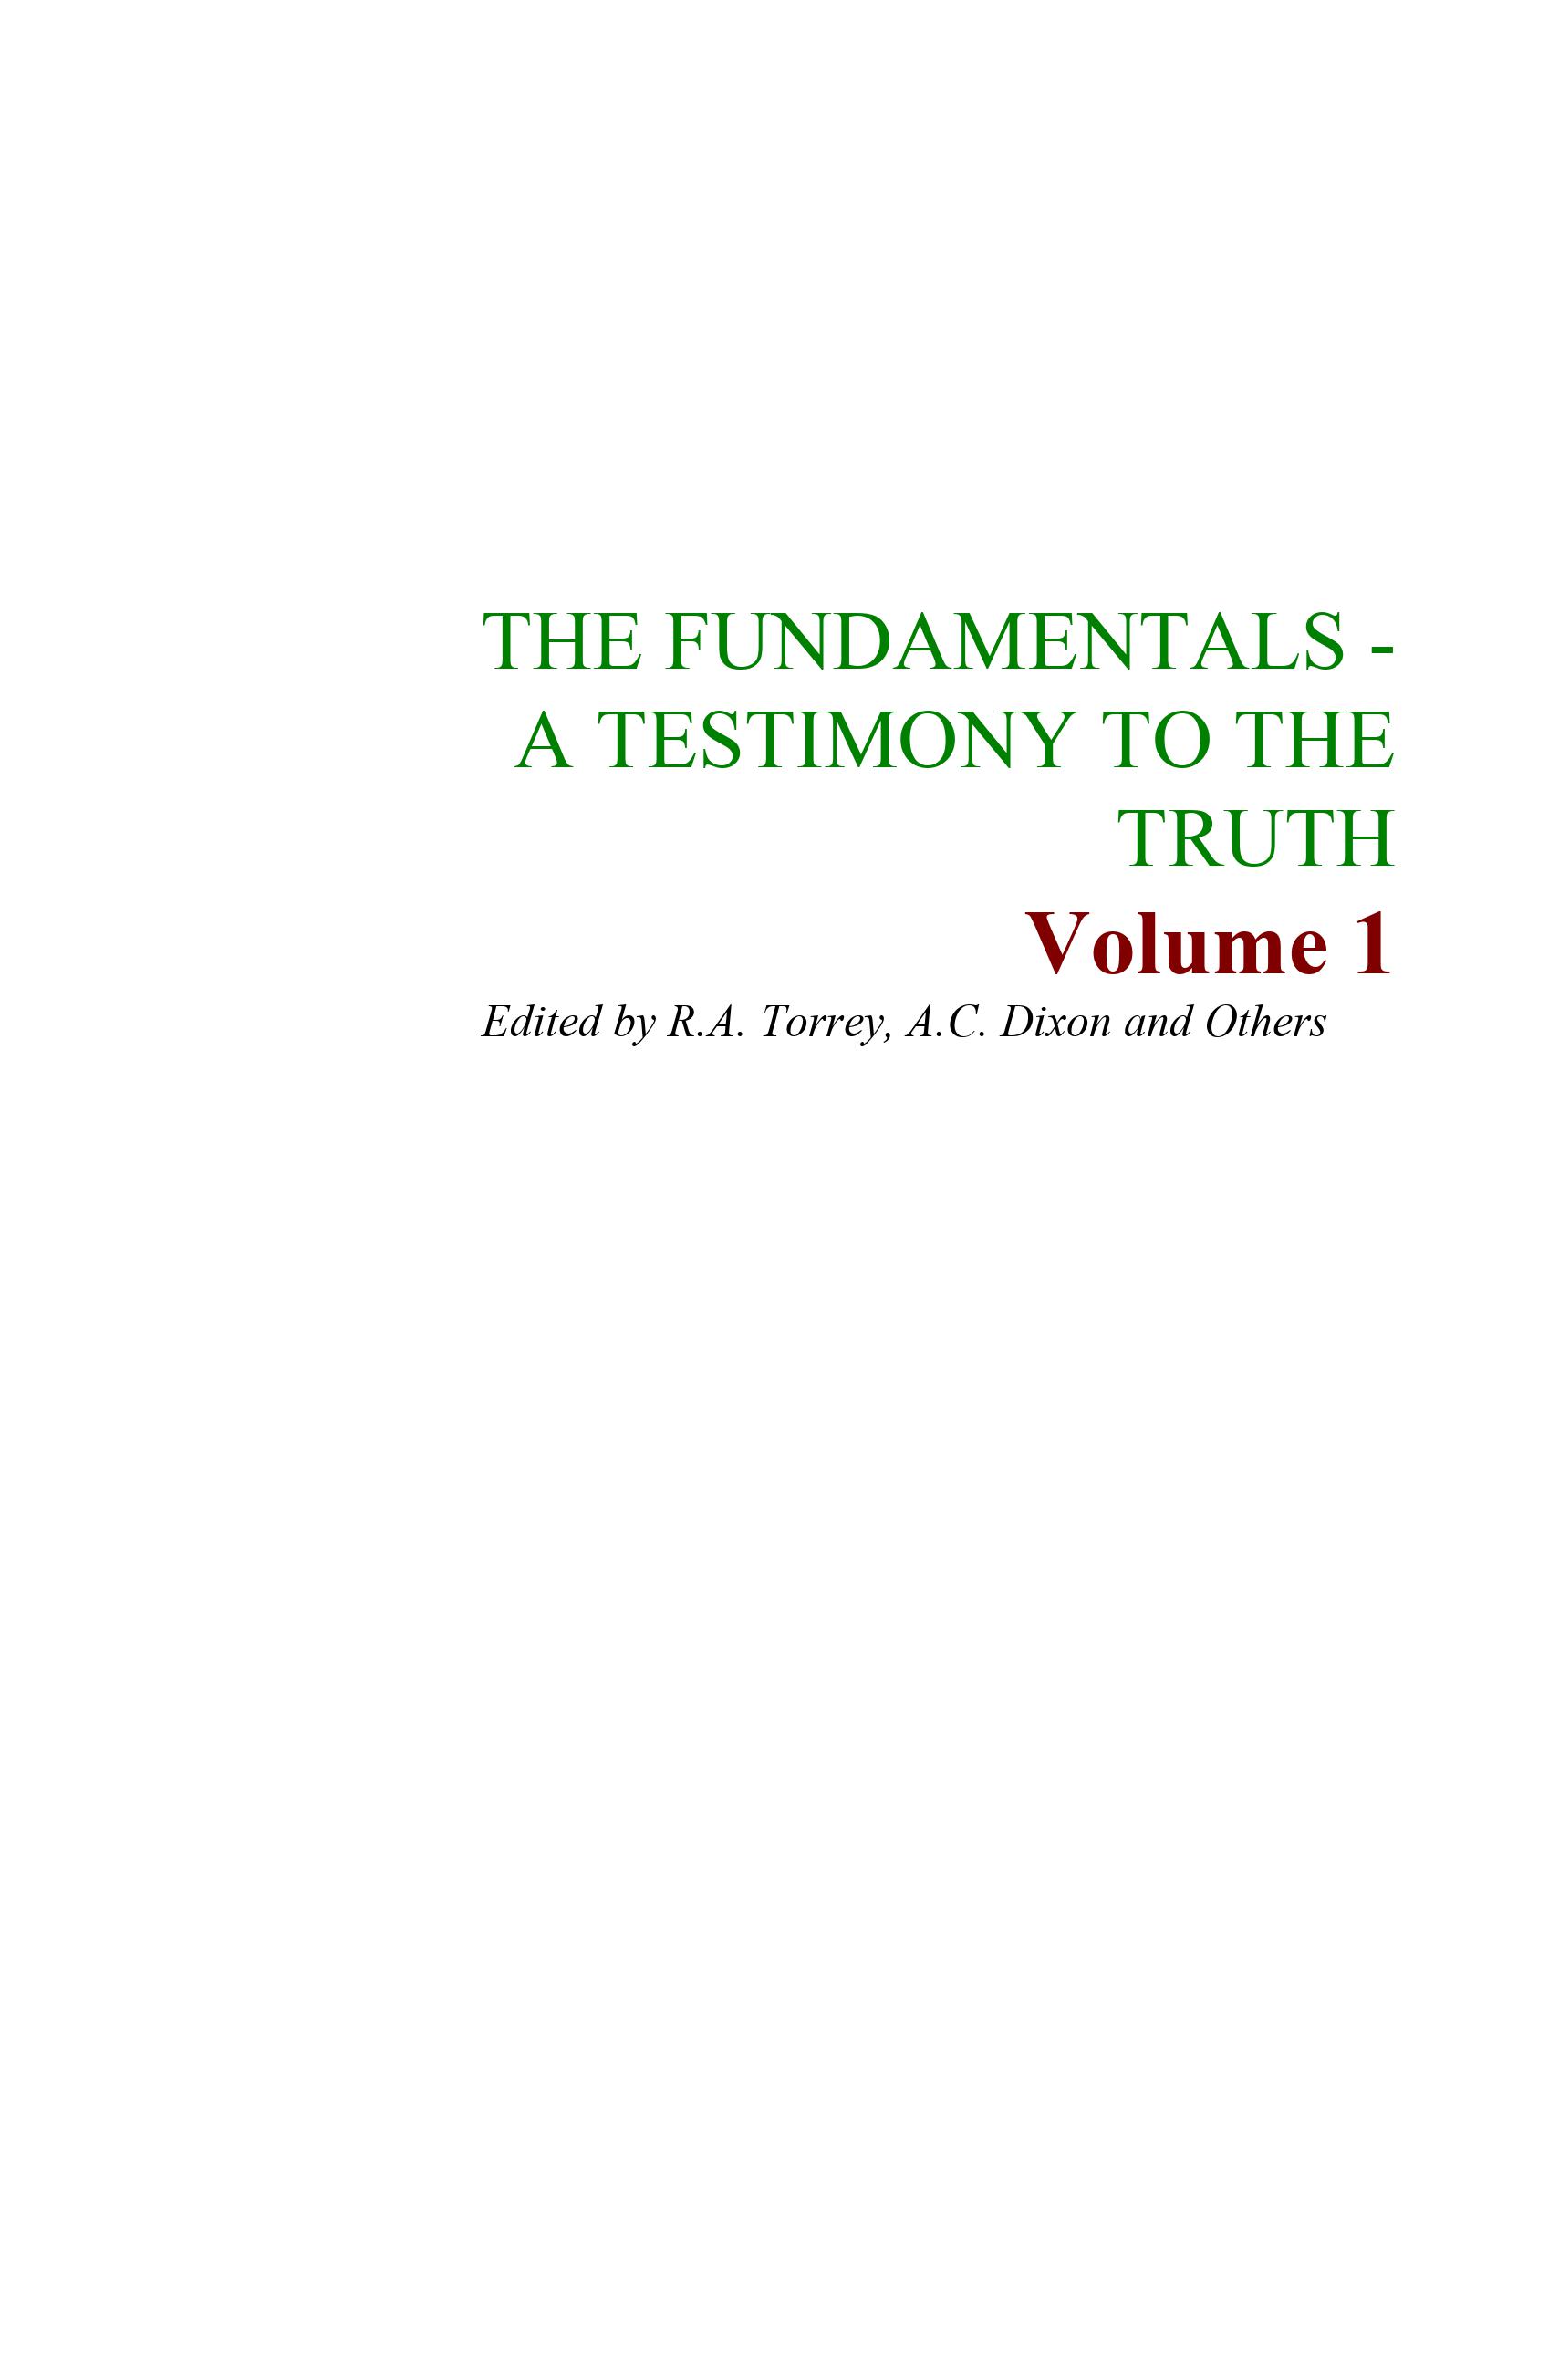 The Fundamentals, Volume 1